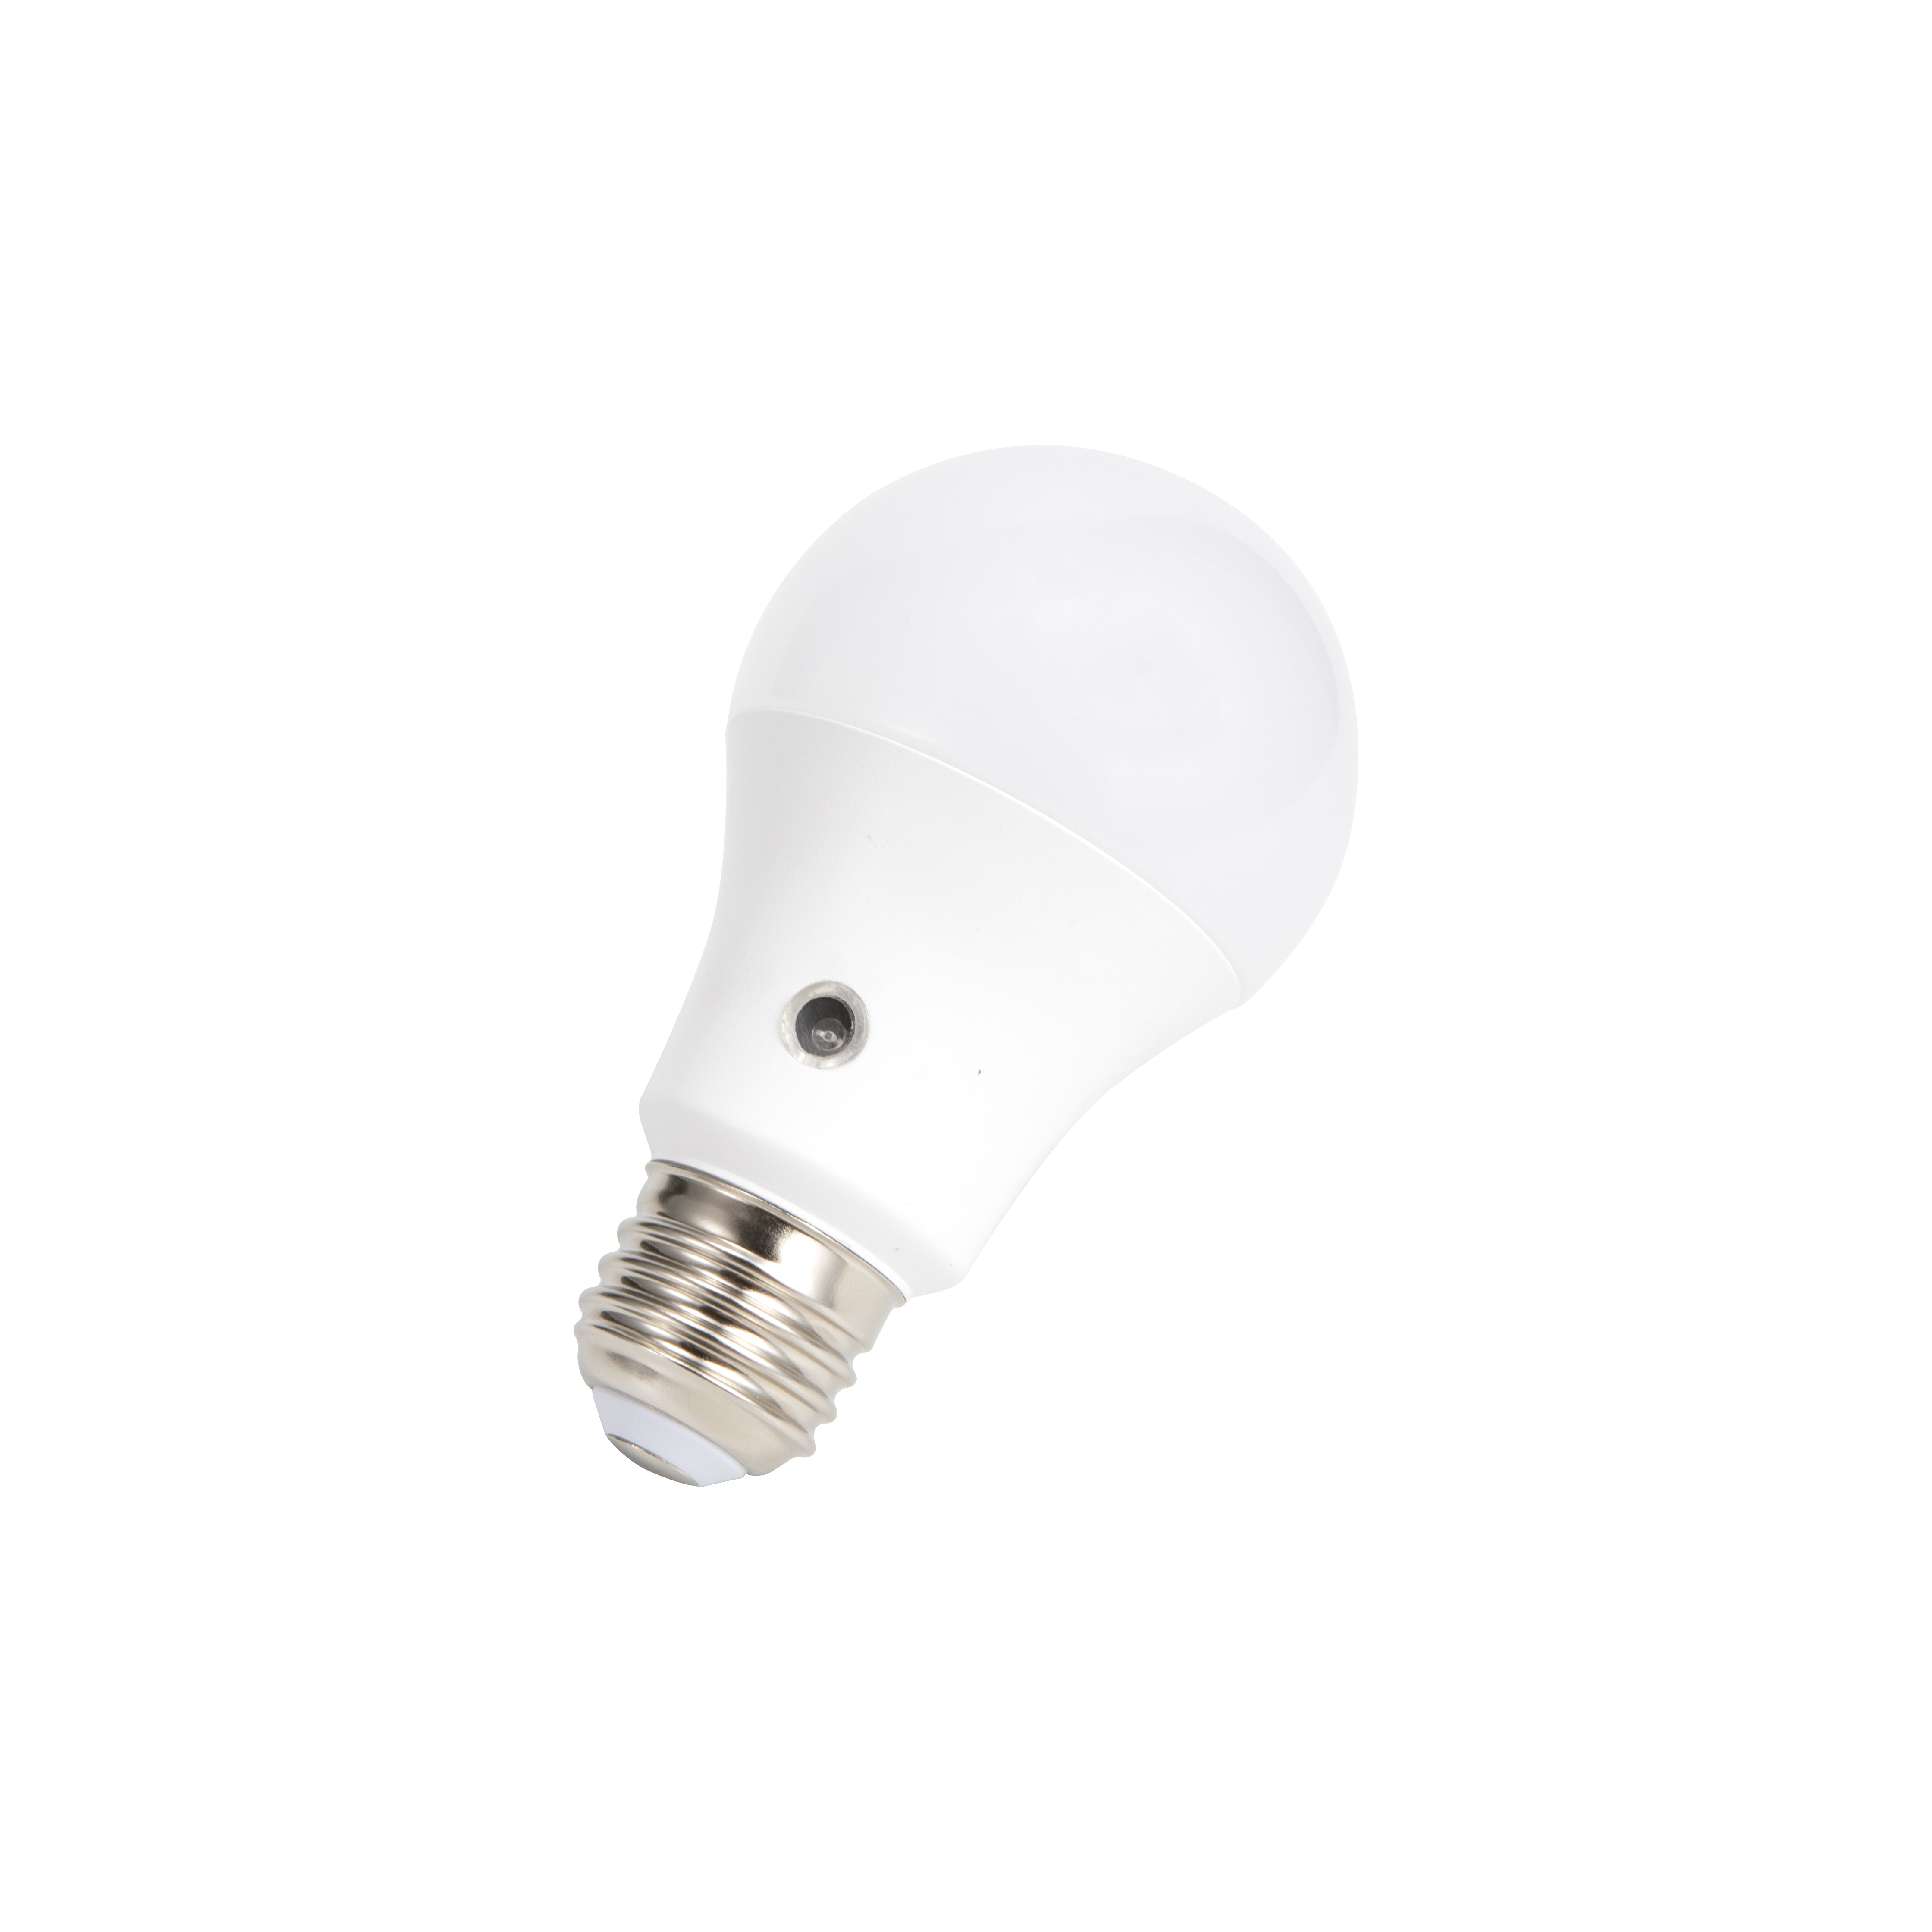 LIT-PaTH Dusk to Dawn LED Light Bulb, A19 Omni Directional Bulb, 9.5W (60W Equivalent) 750 Lumen, Aluminum Injected Housing (5000K-Daylight White, 1-Pack)